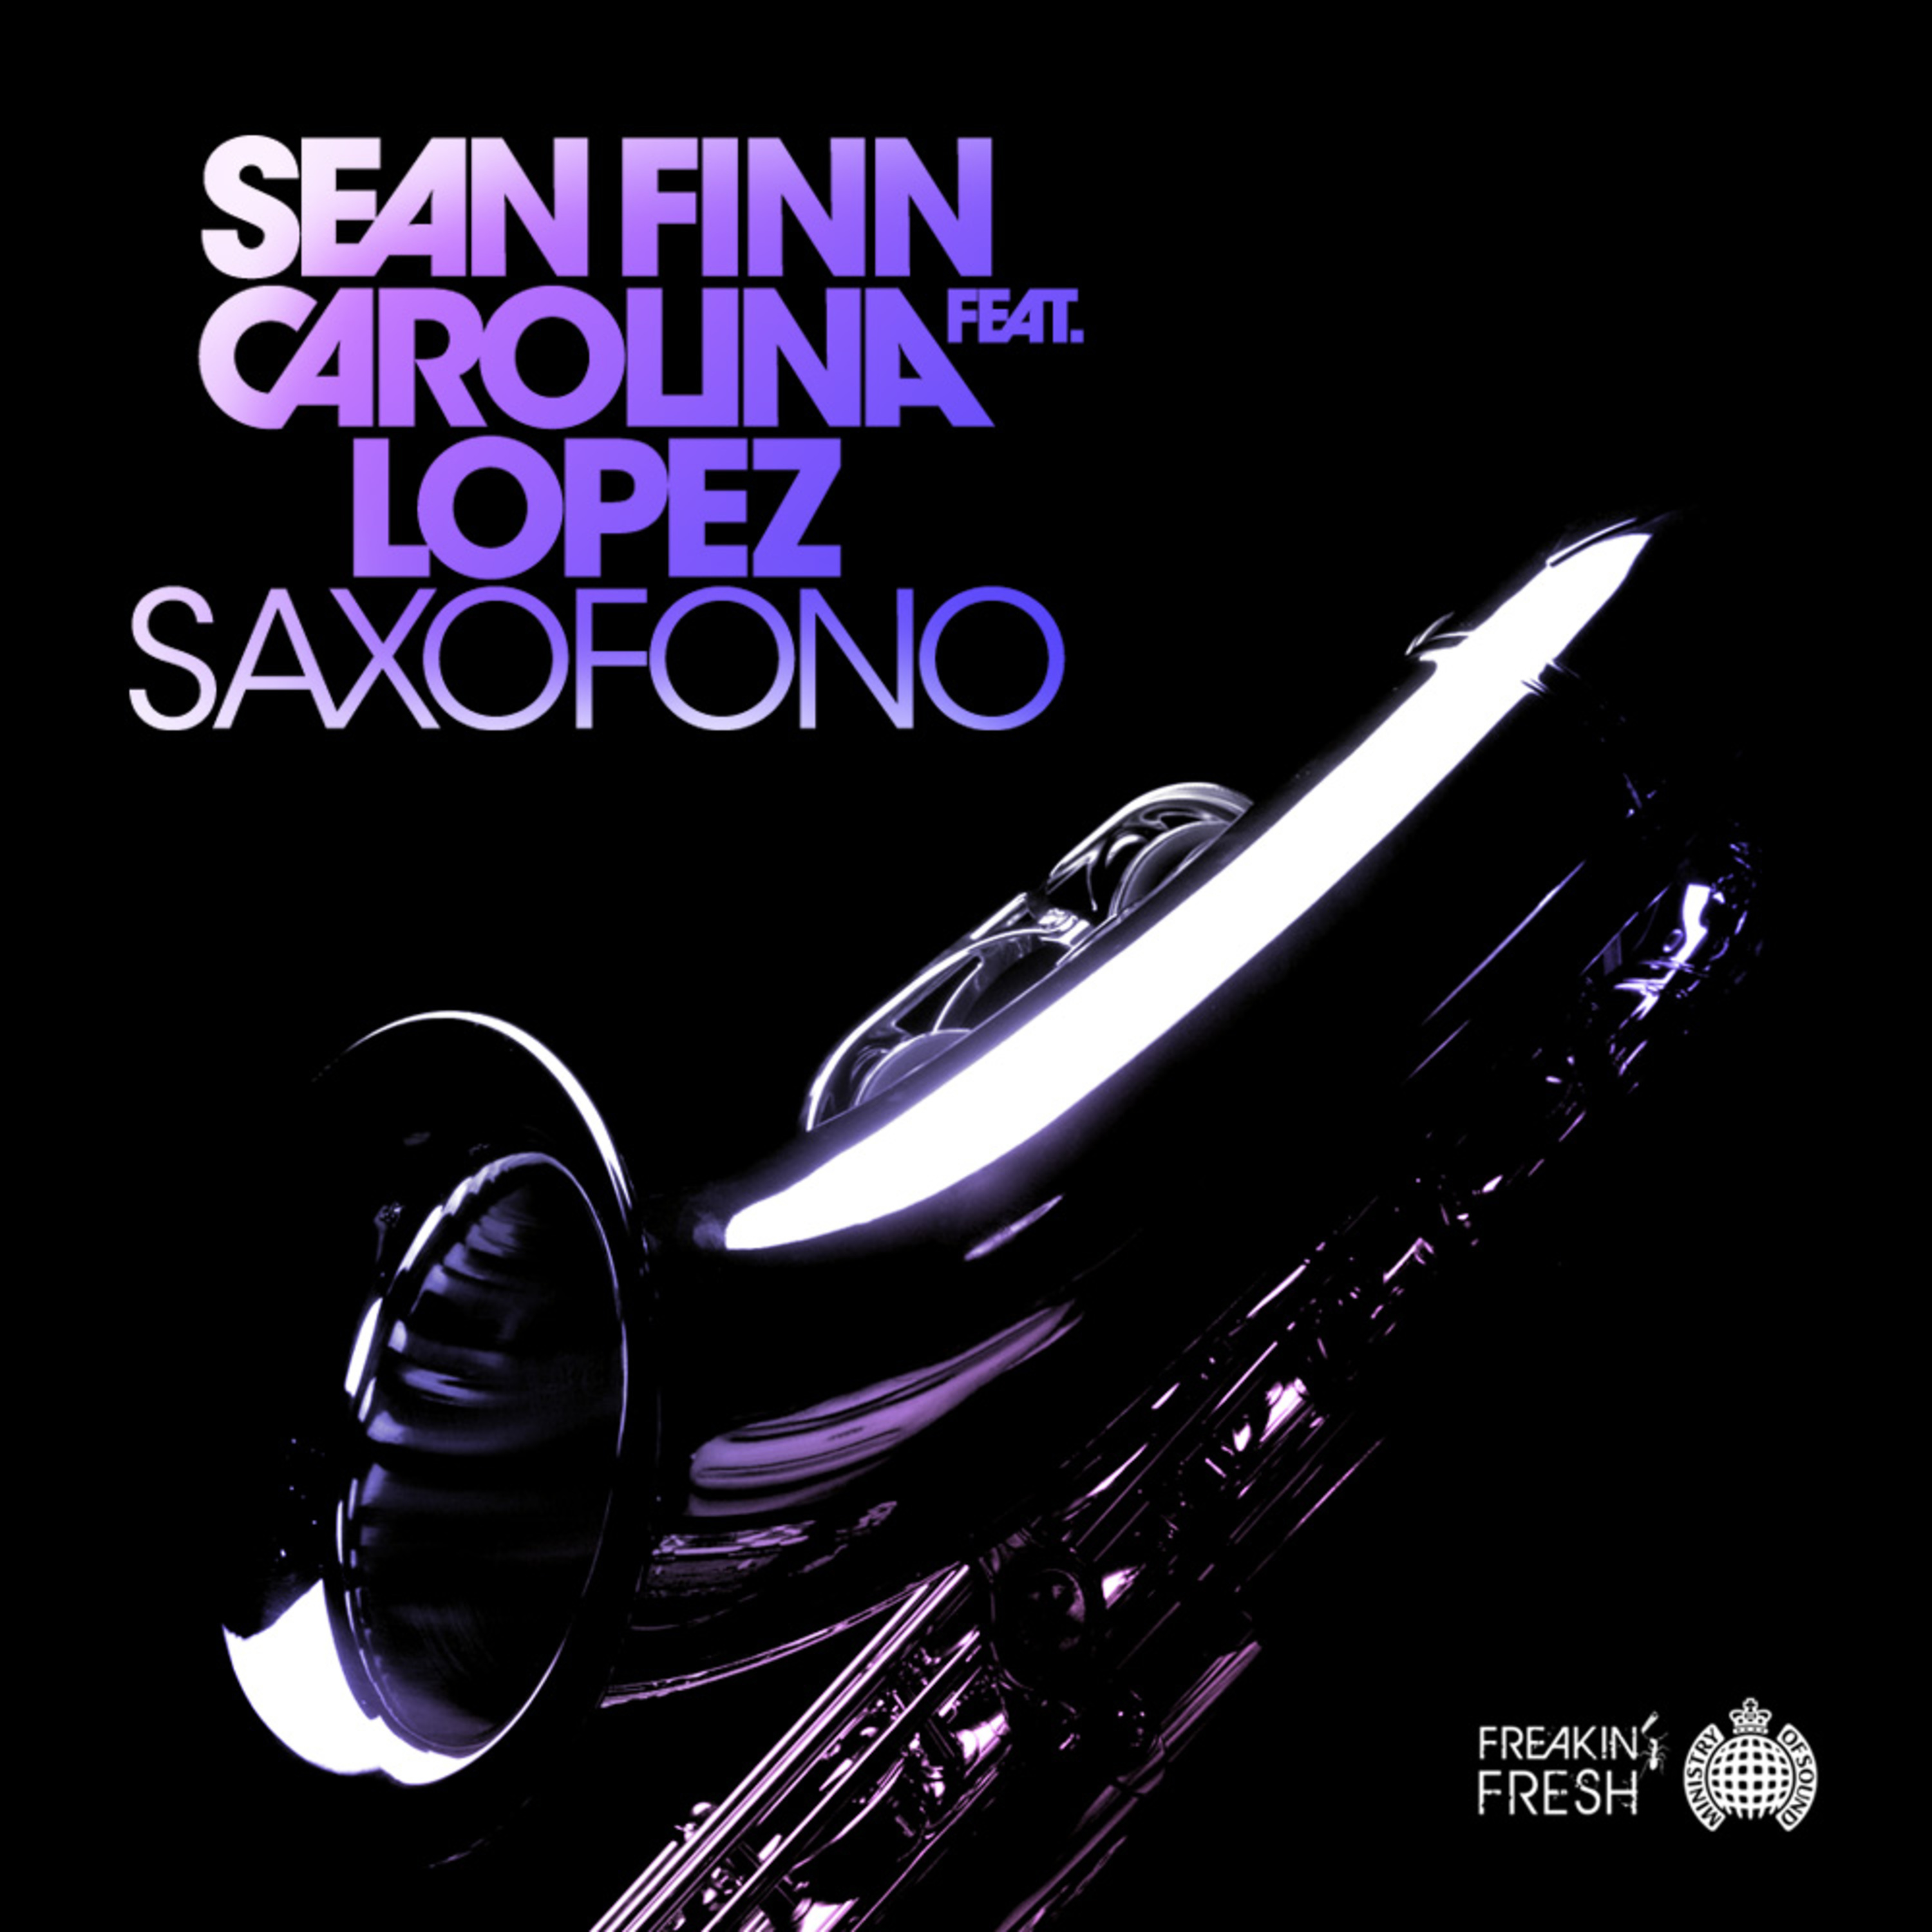 Saxo fono Original Mix